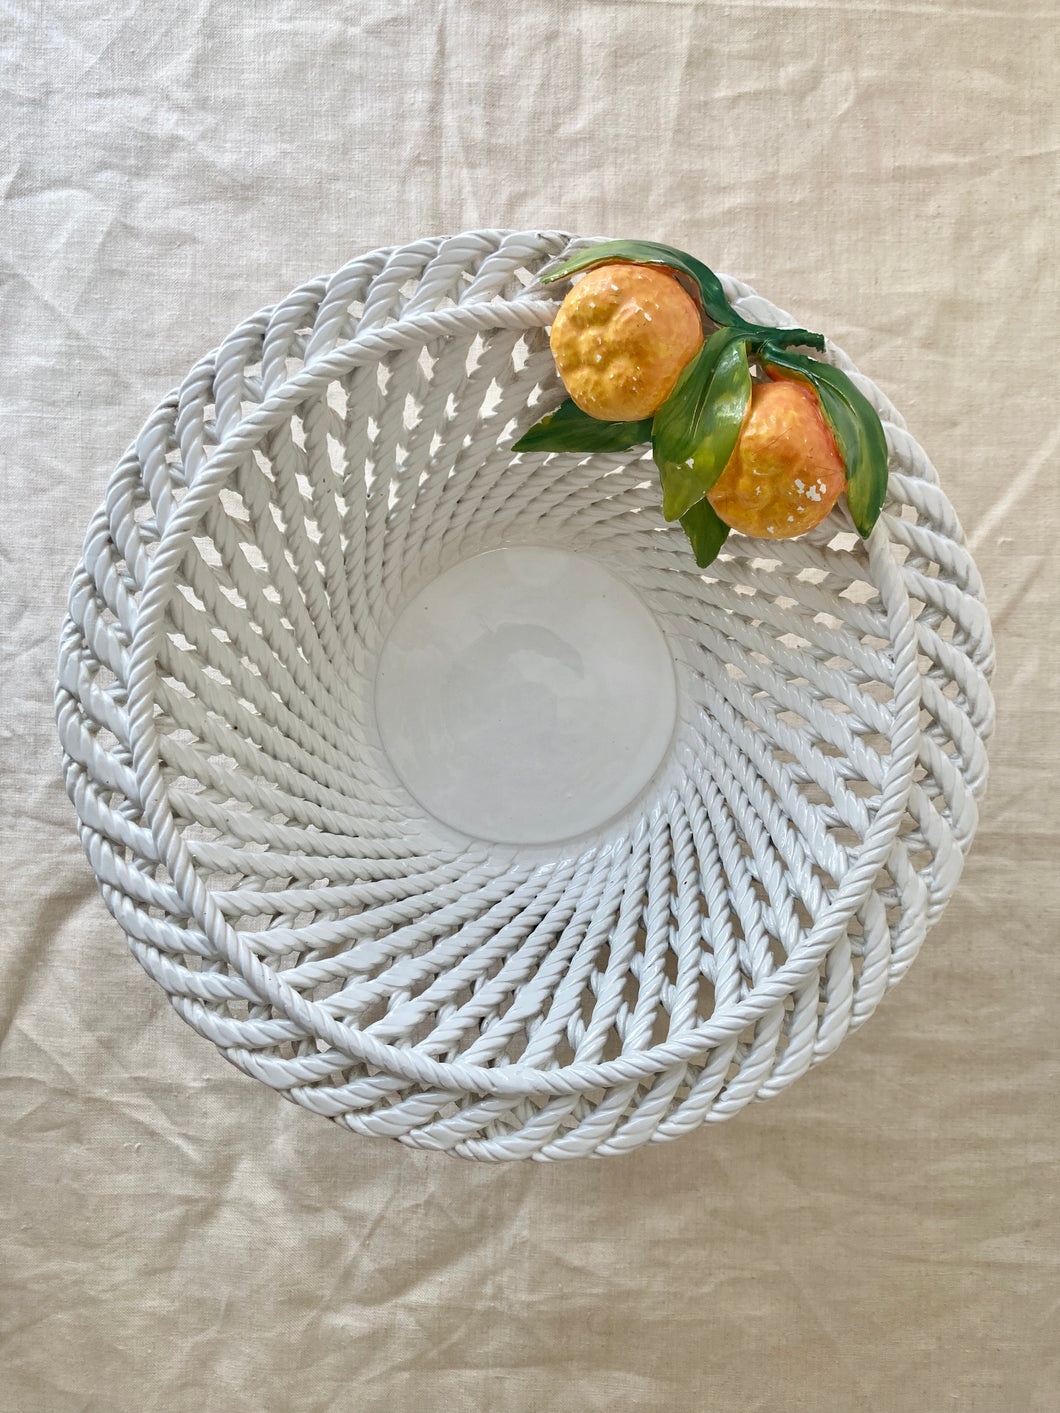 Italian pierced lattice faux basket pedestal dish with satsumas